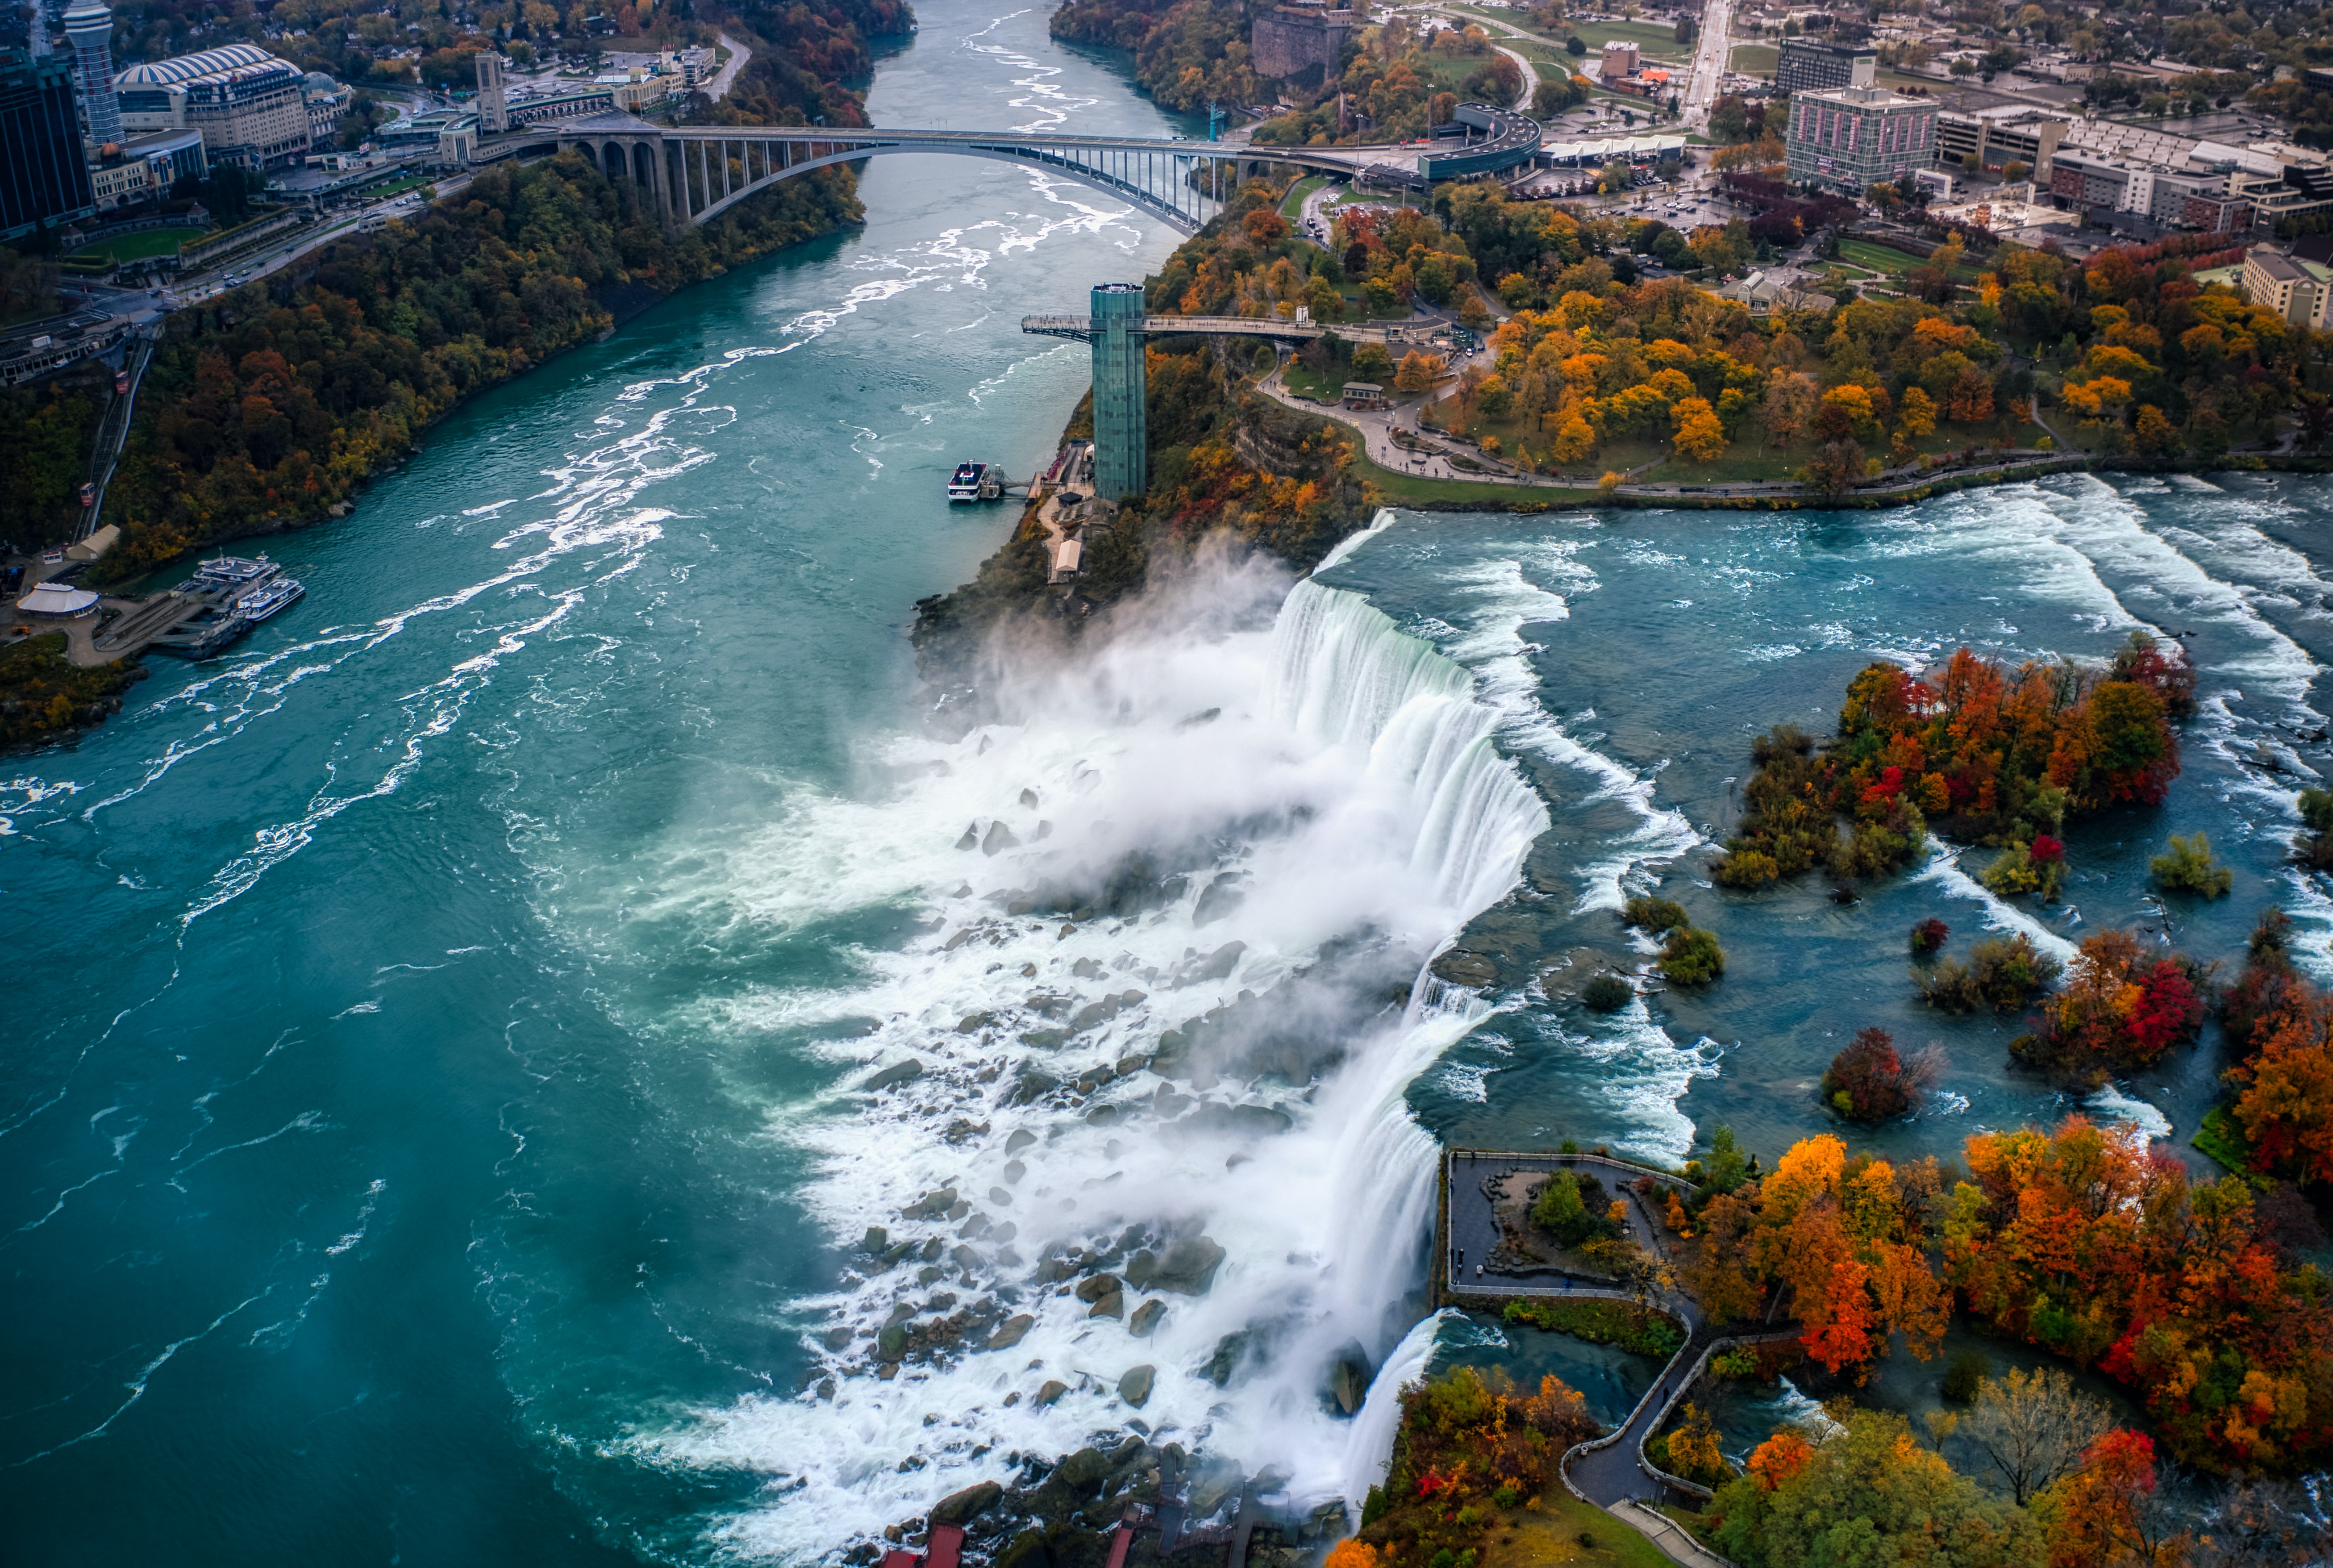 But what is Niagara Falls?